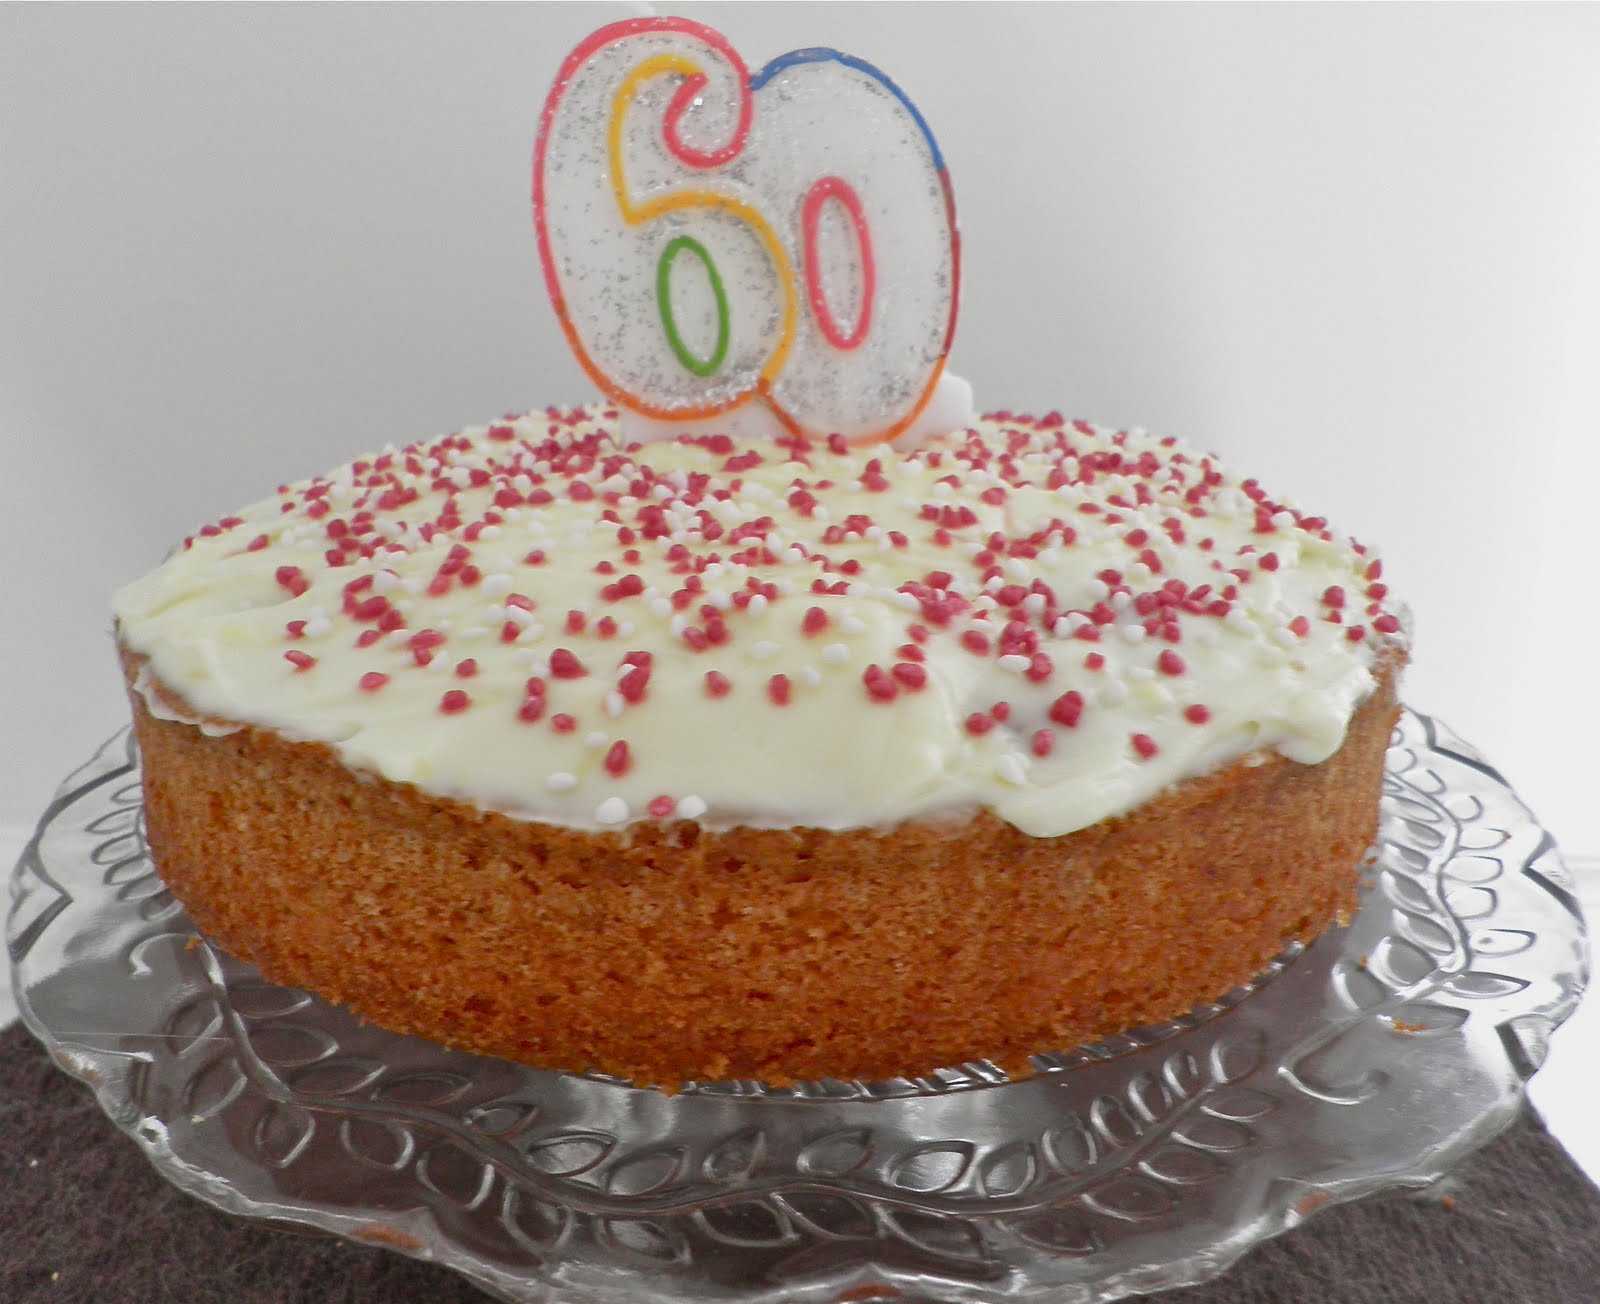 60th Birthday Cake Ideas For Dad